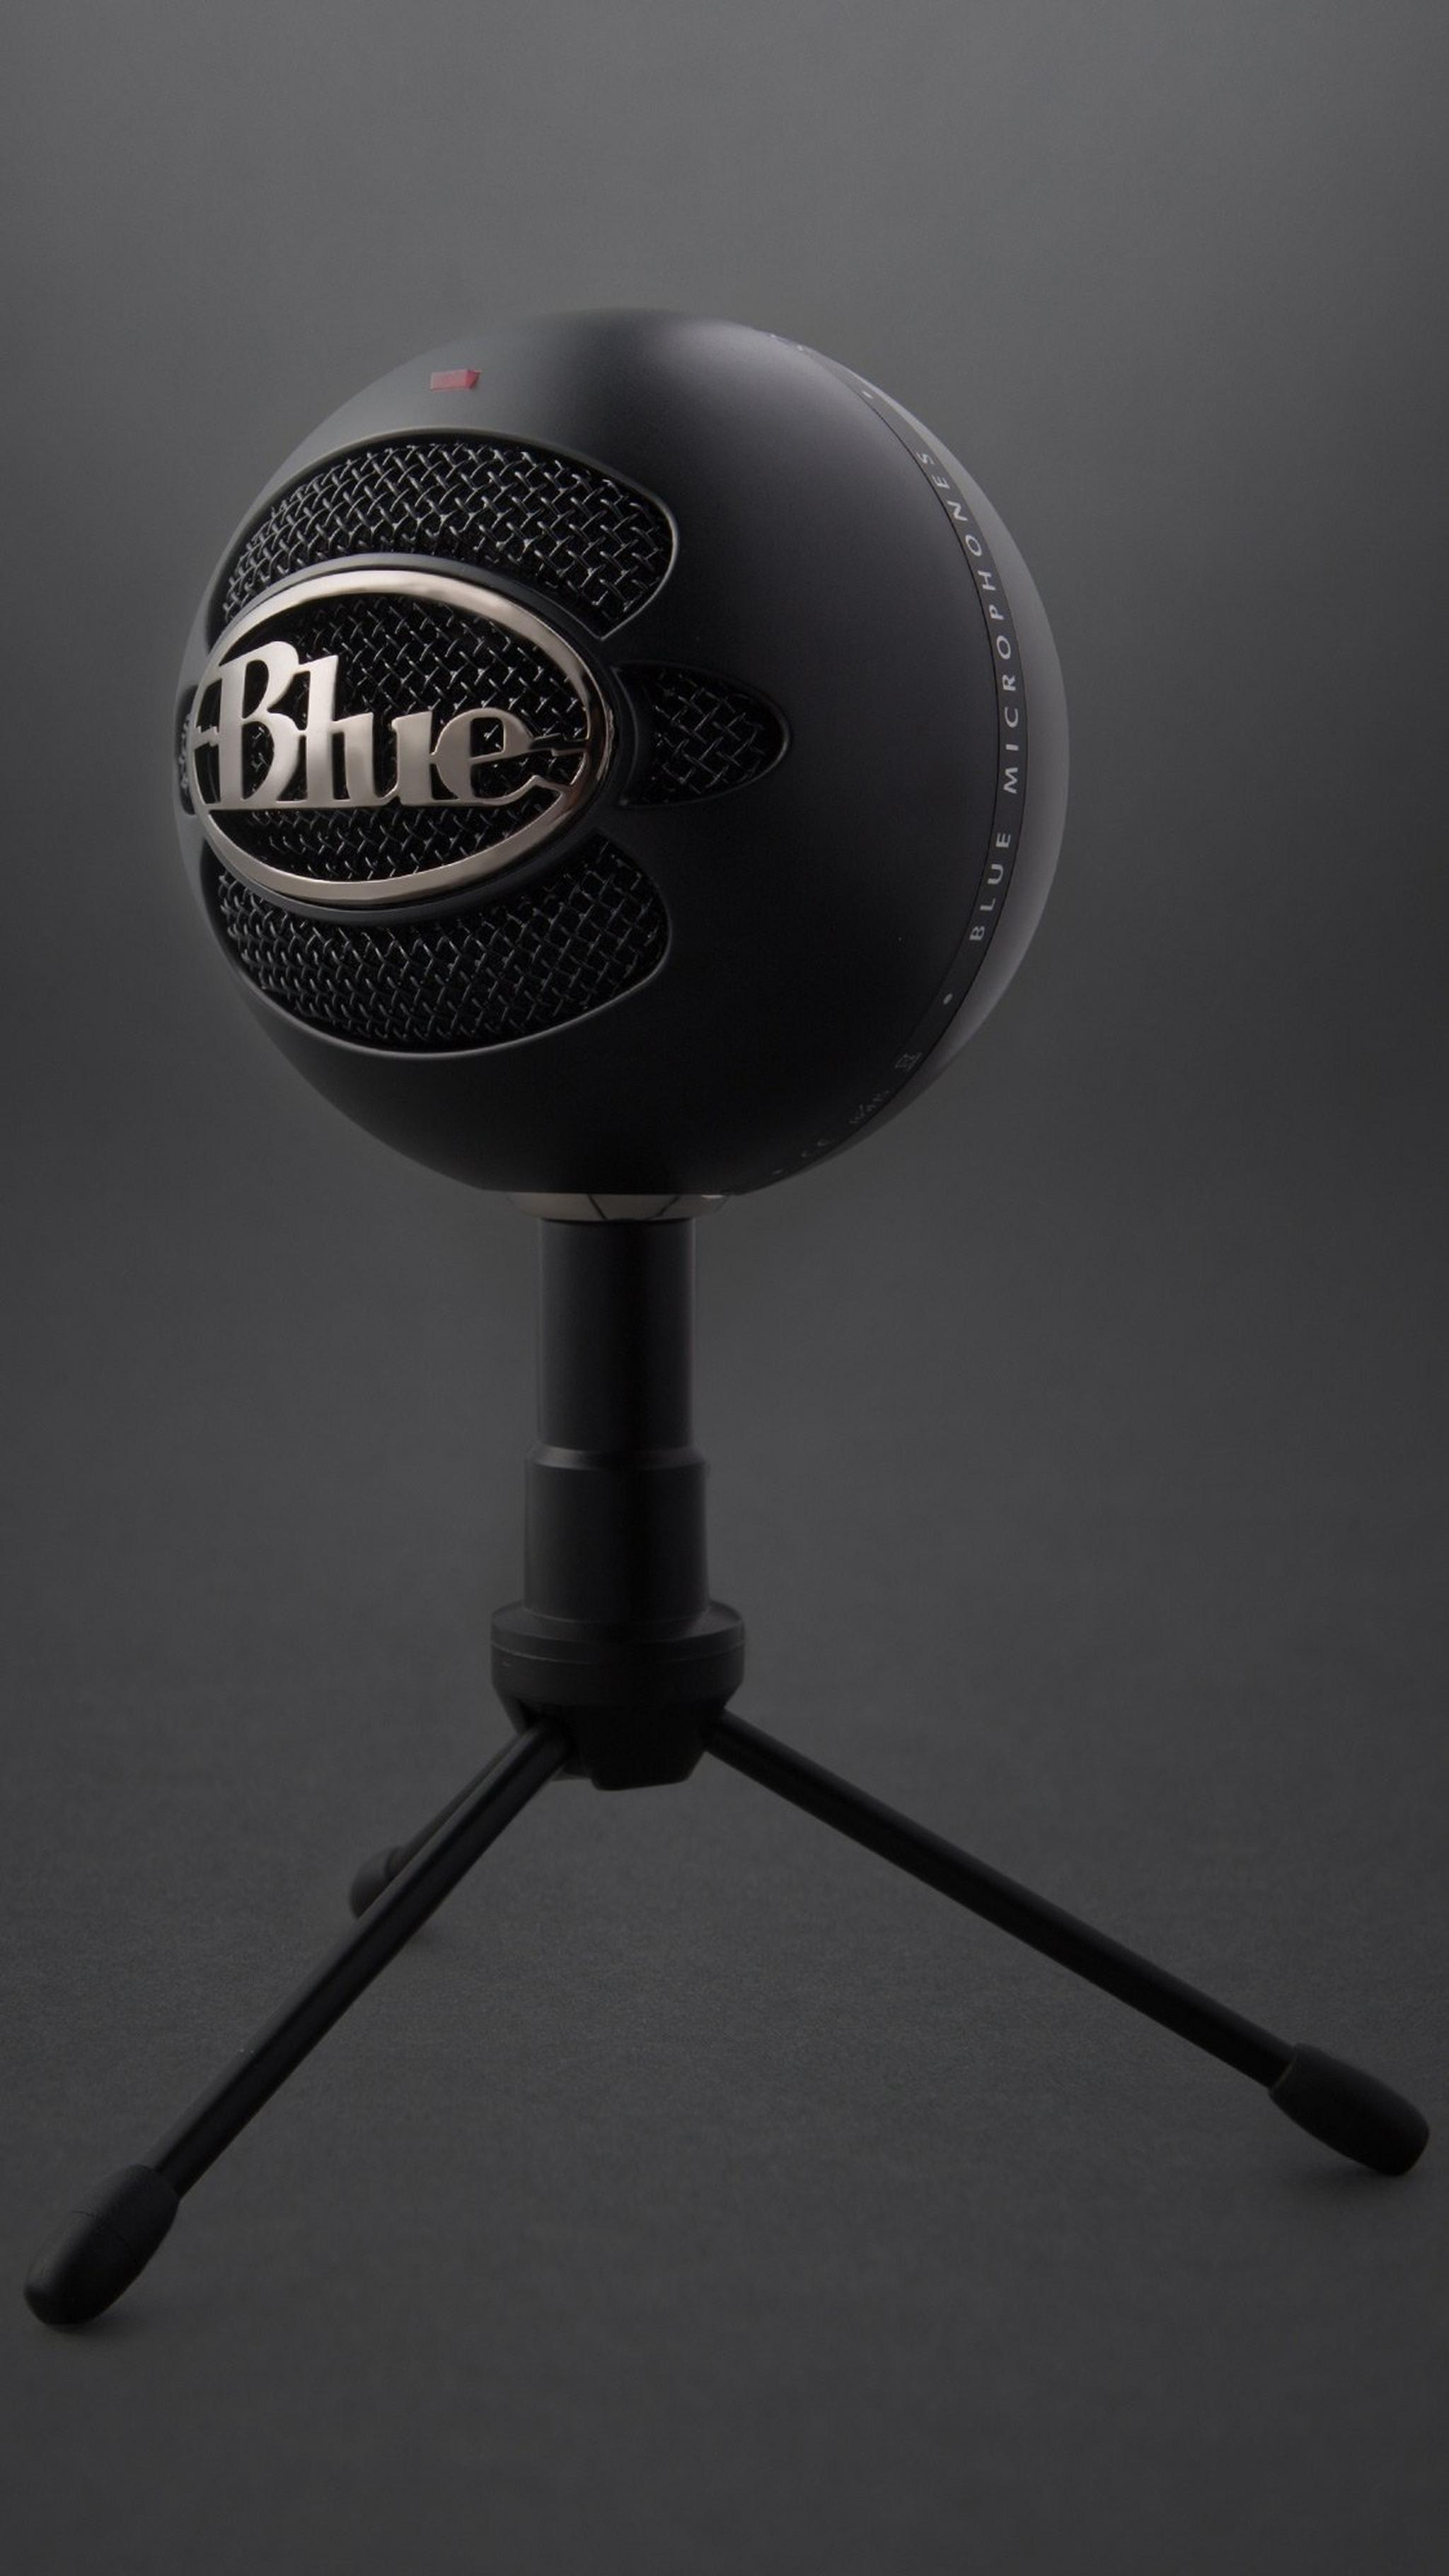 BLUE Yeti Snowball iCE USB Microphone - Black